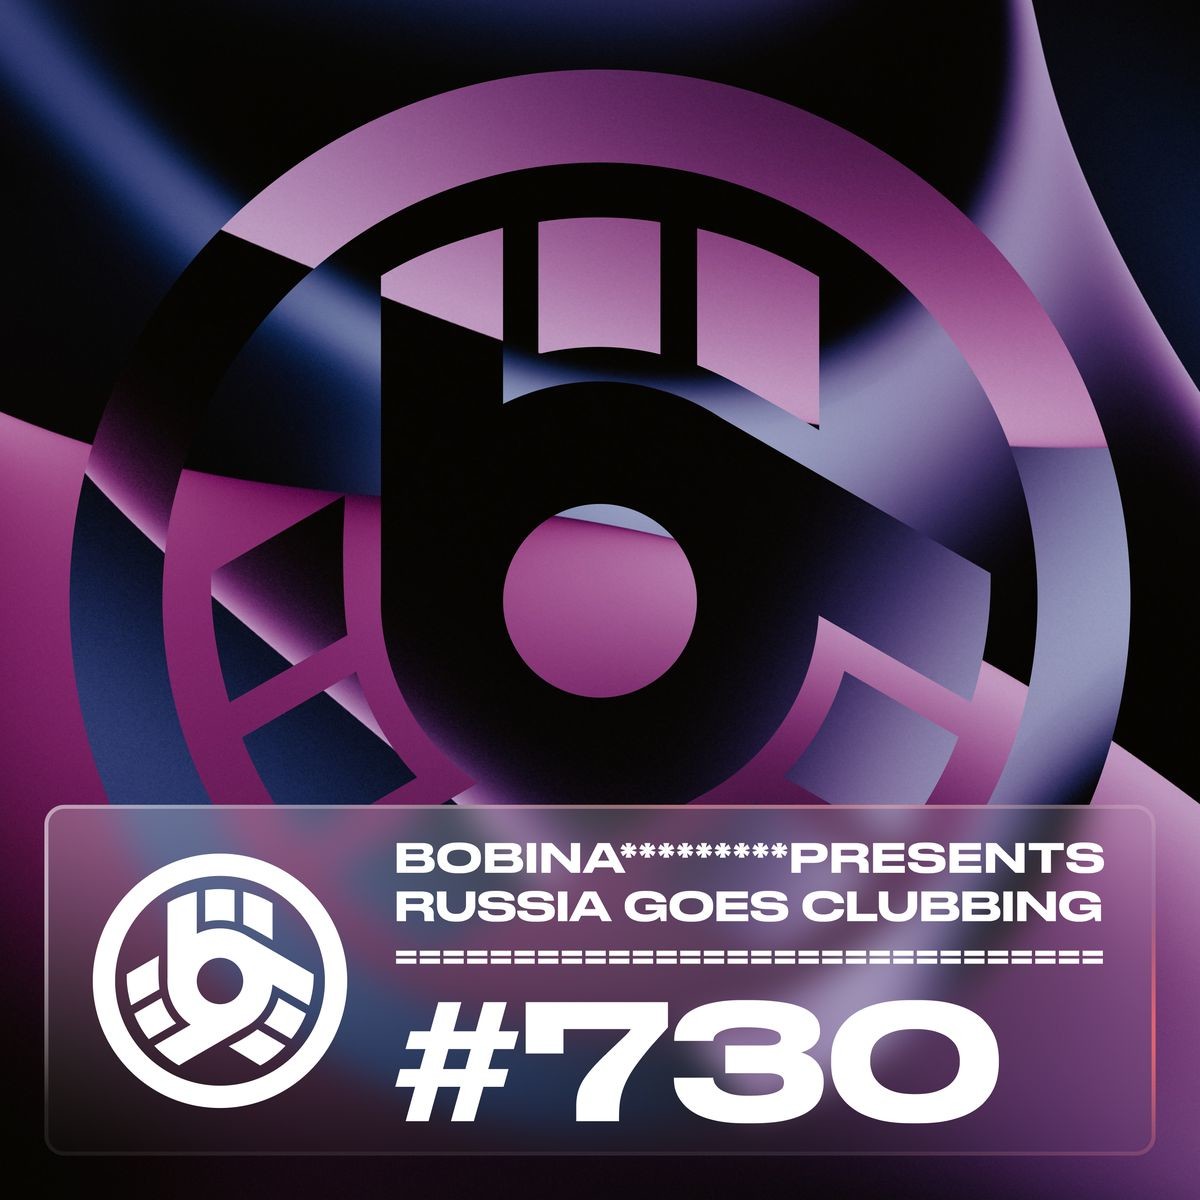 Russia Goes Clubbing #730